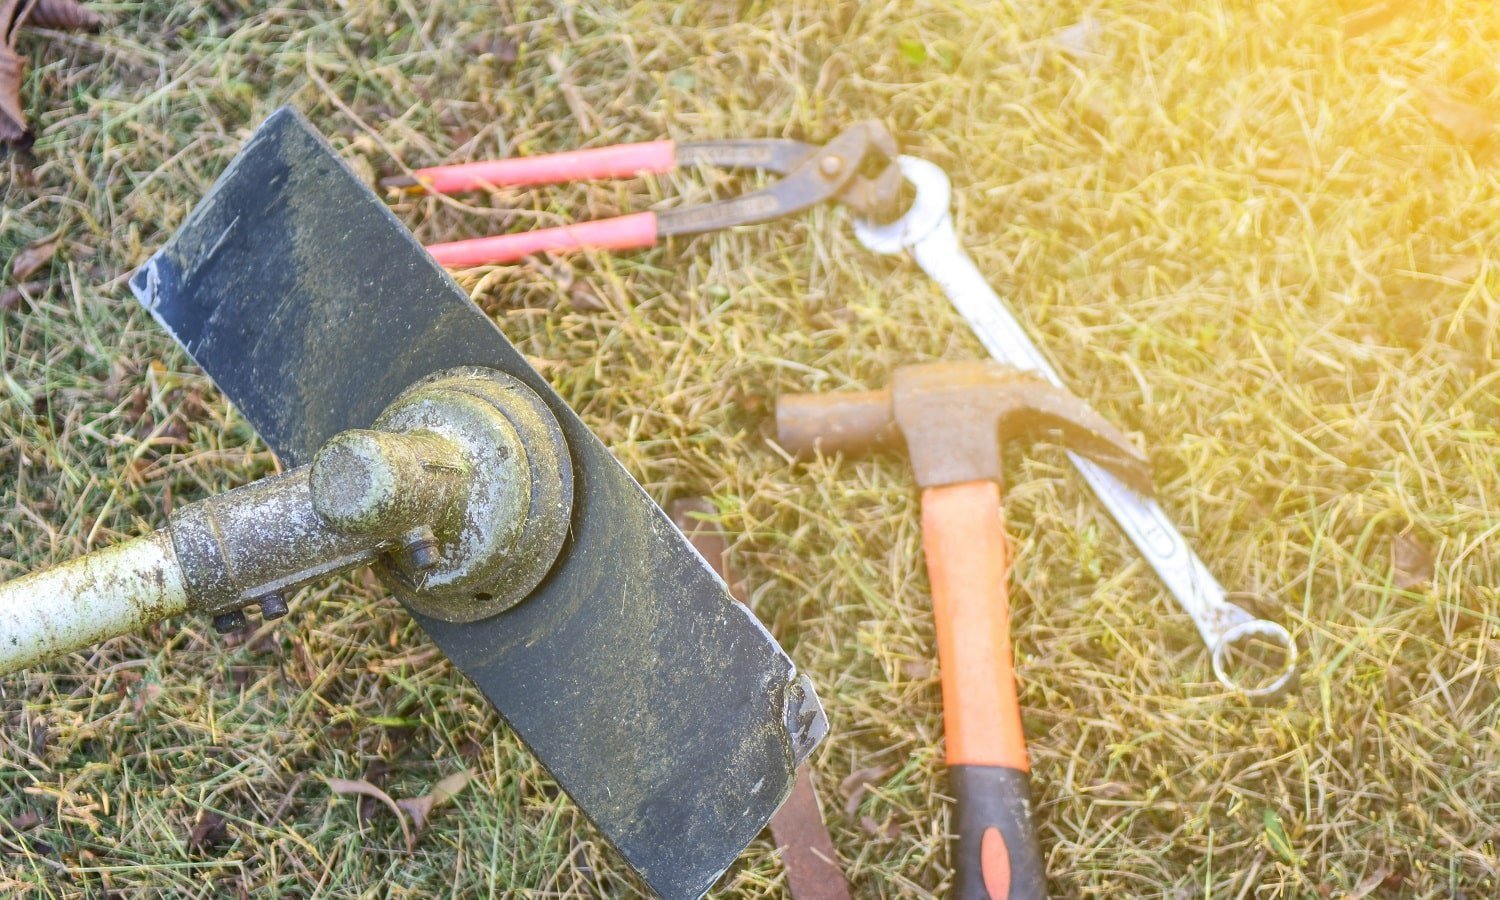 Repair blade of a lawn mower